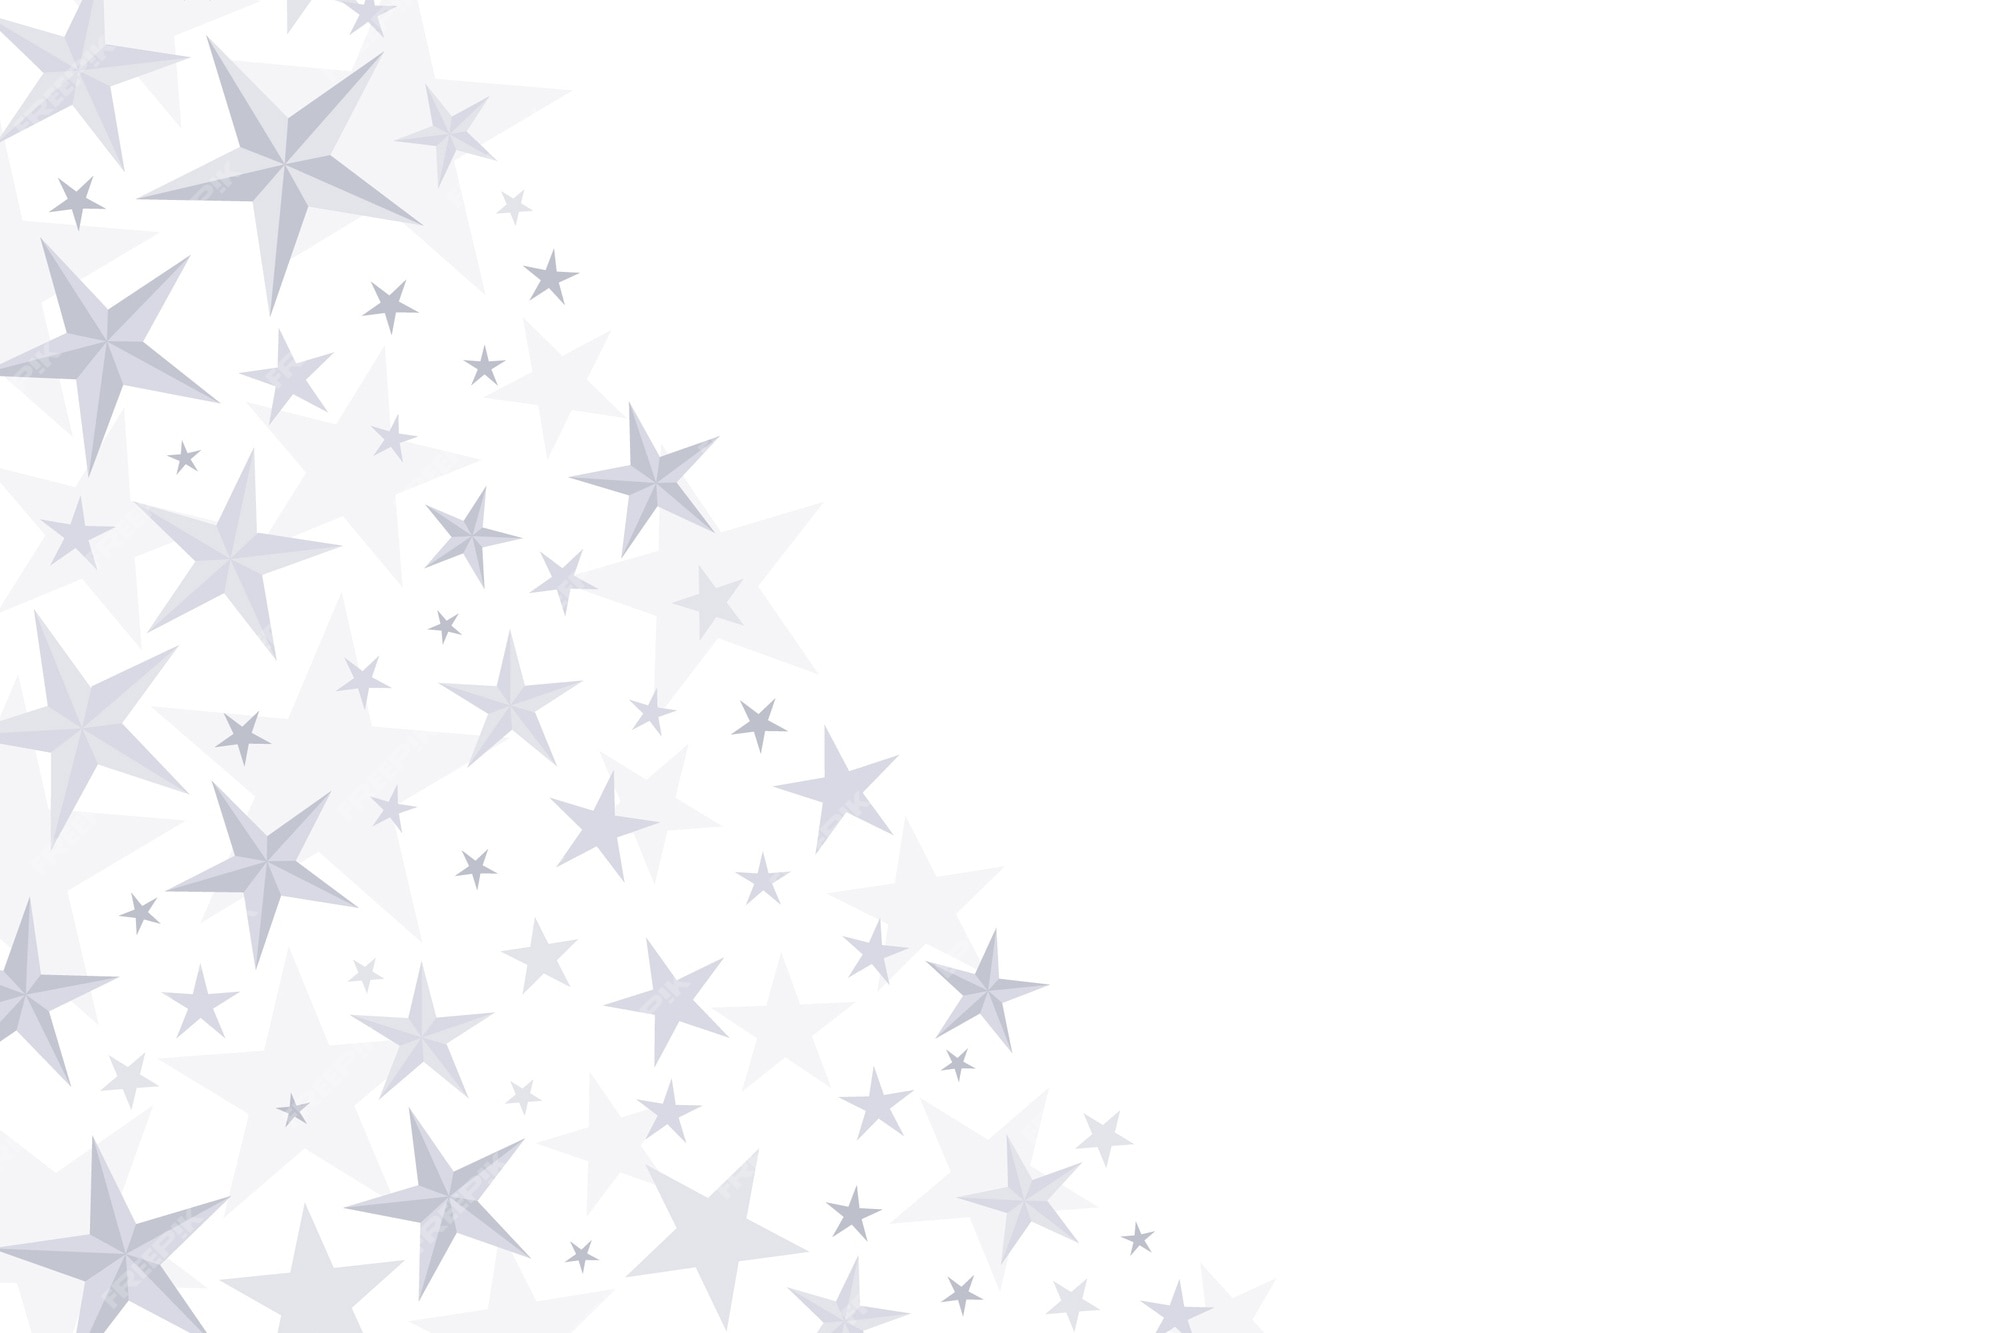 White Stars Background Images - Free Download on Freepik